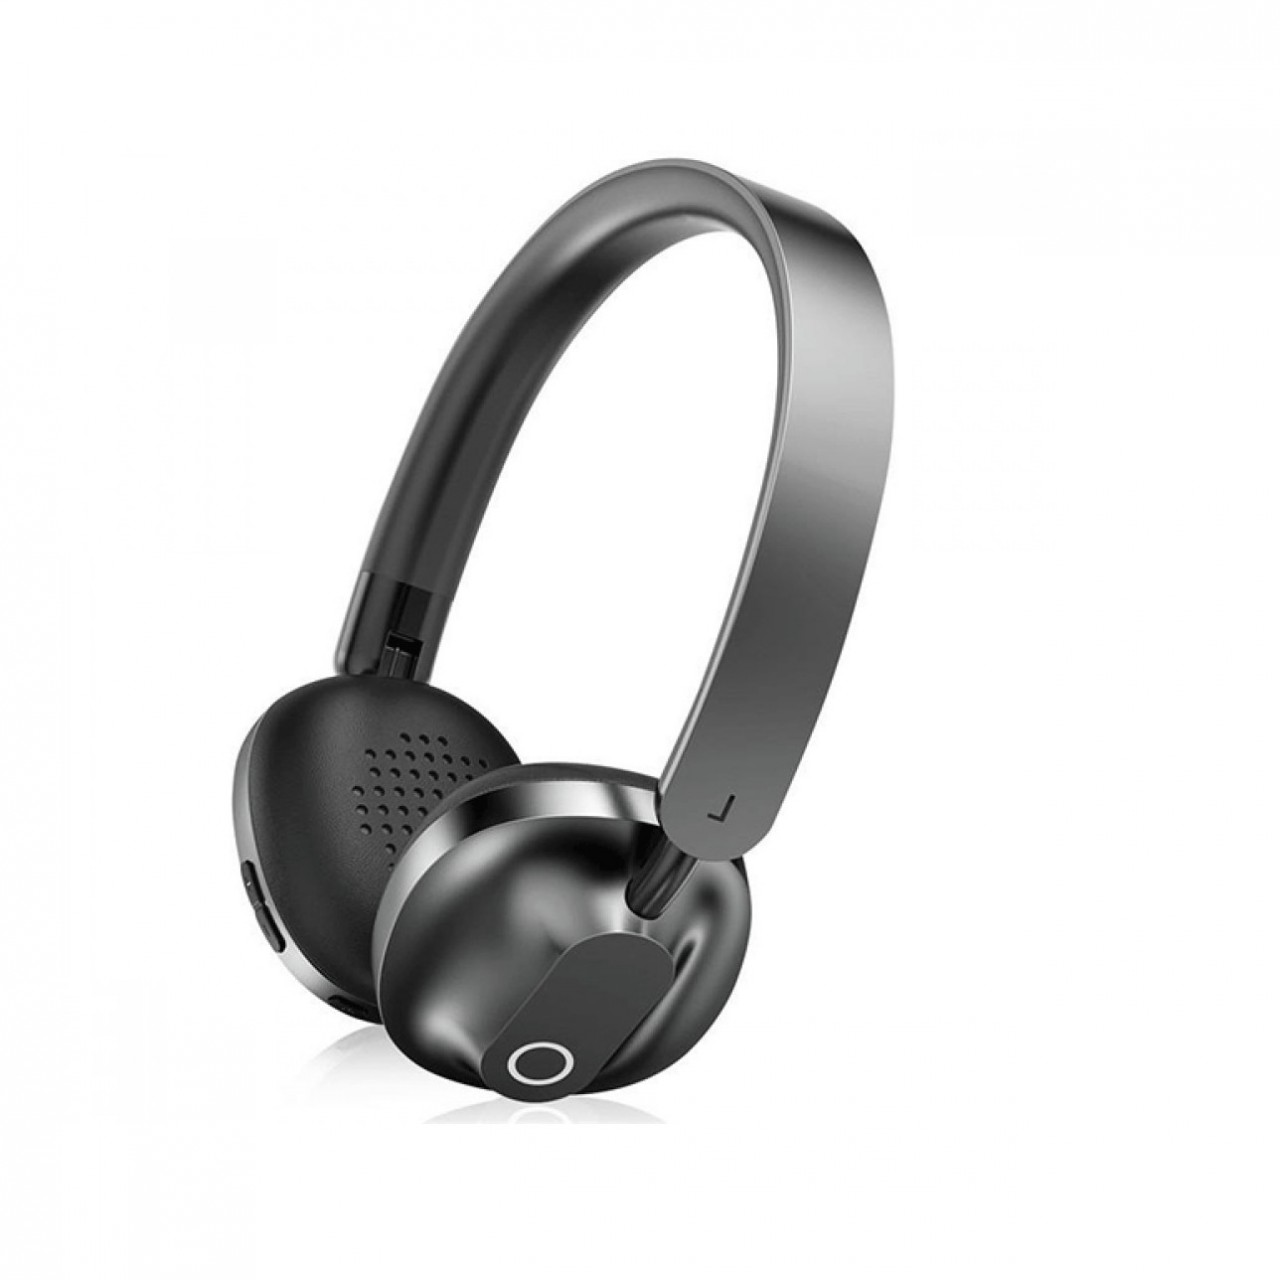 Baseus Encok D01 Wireless Bluetooh Headphone - 4.2 Bluetooth Technology